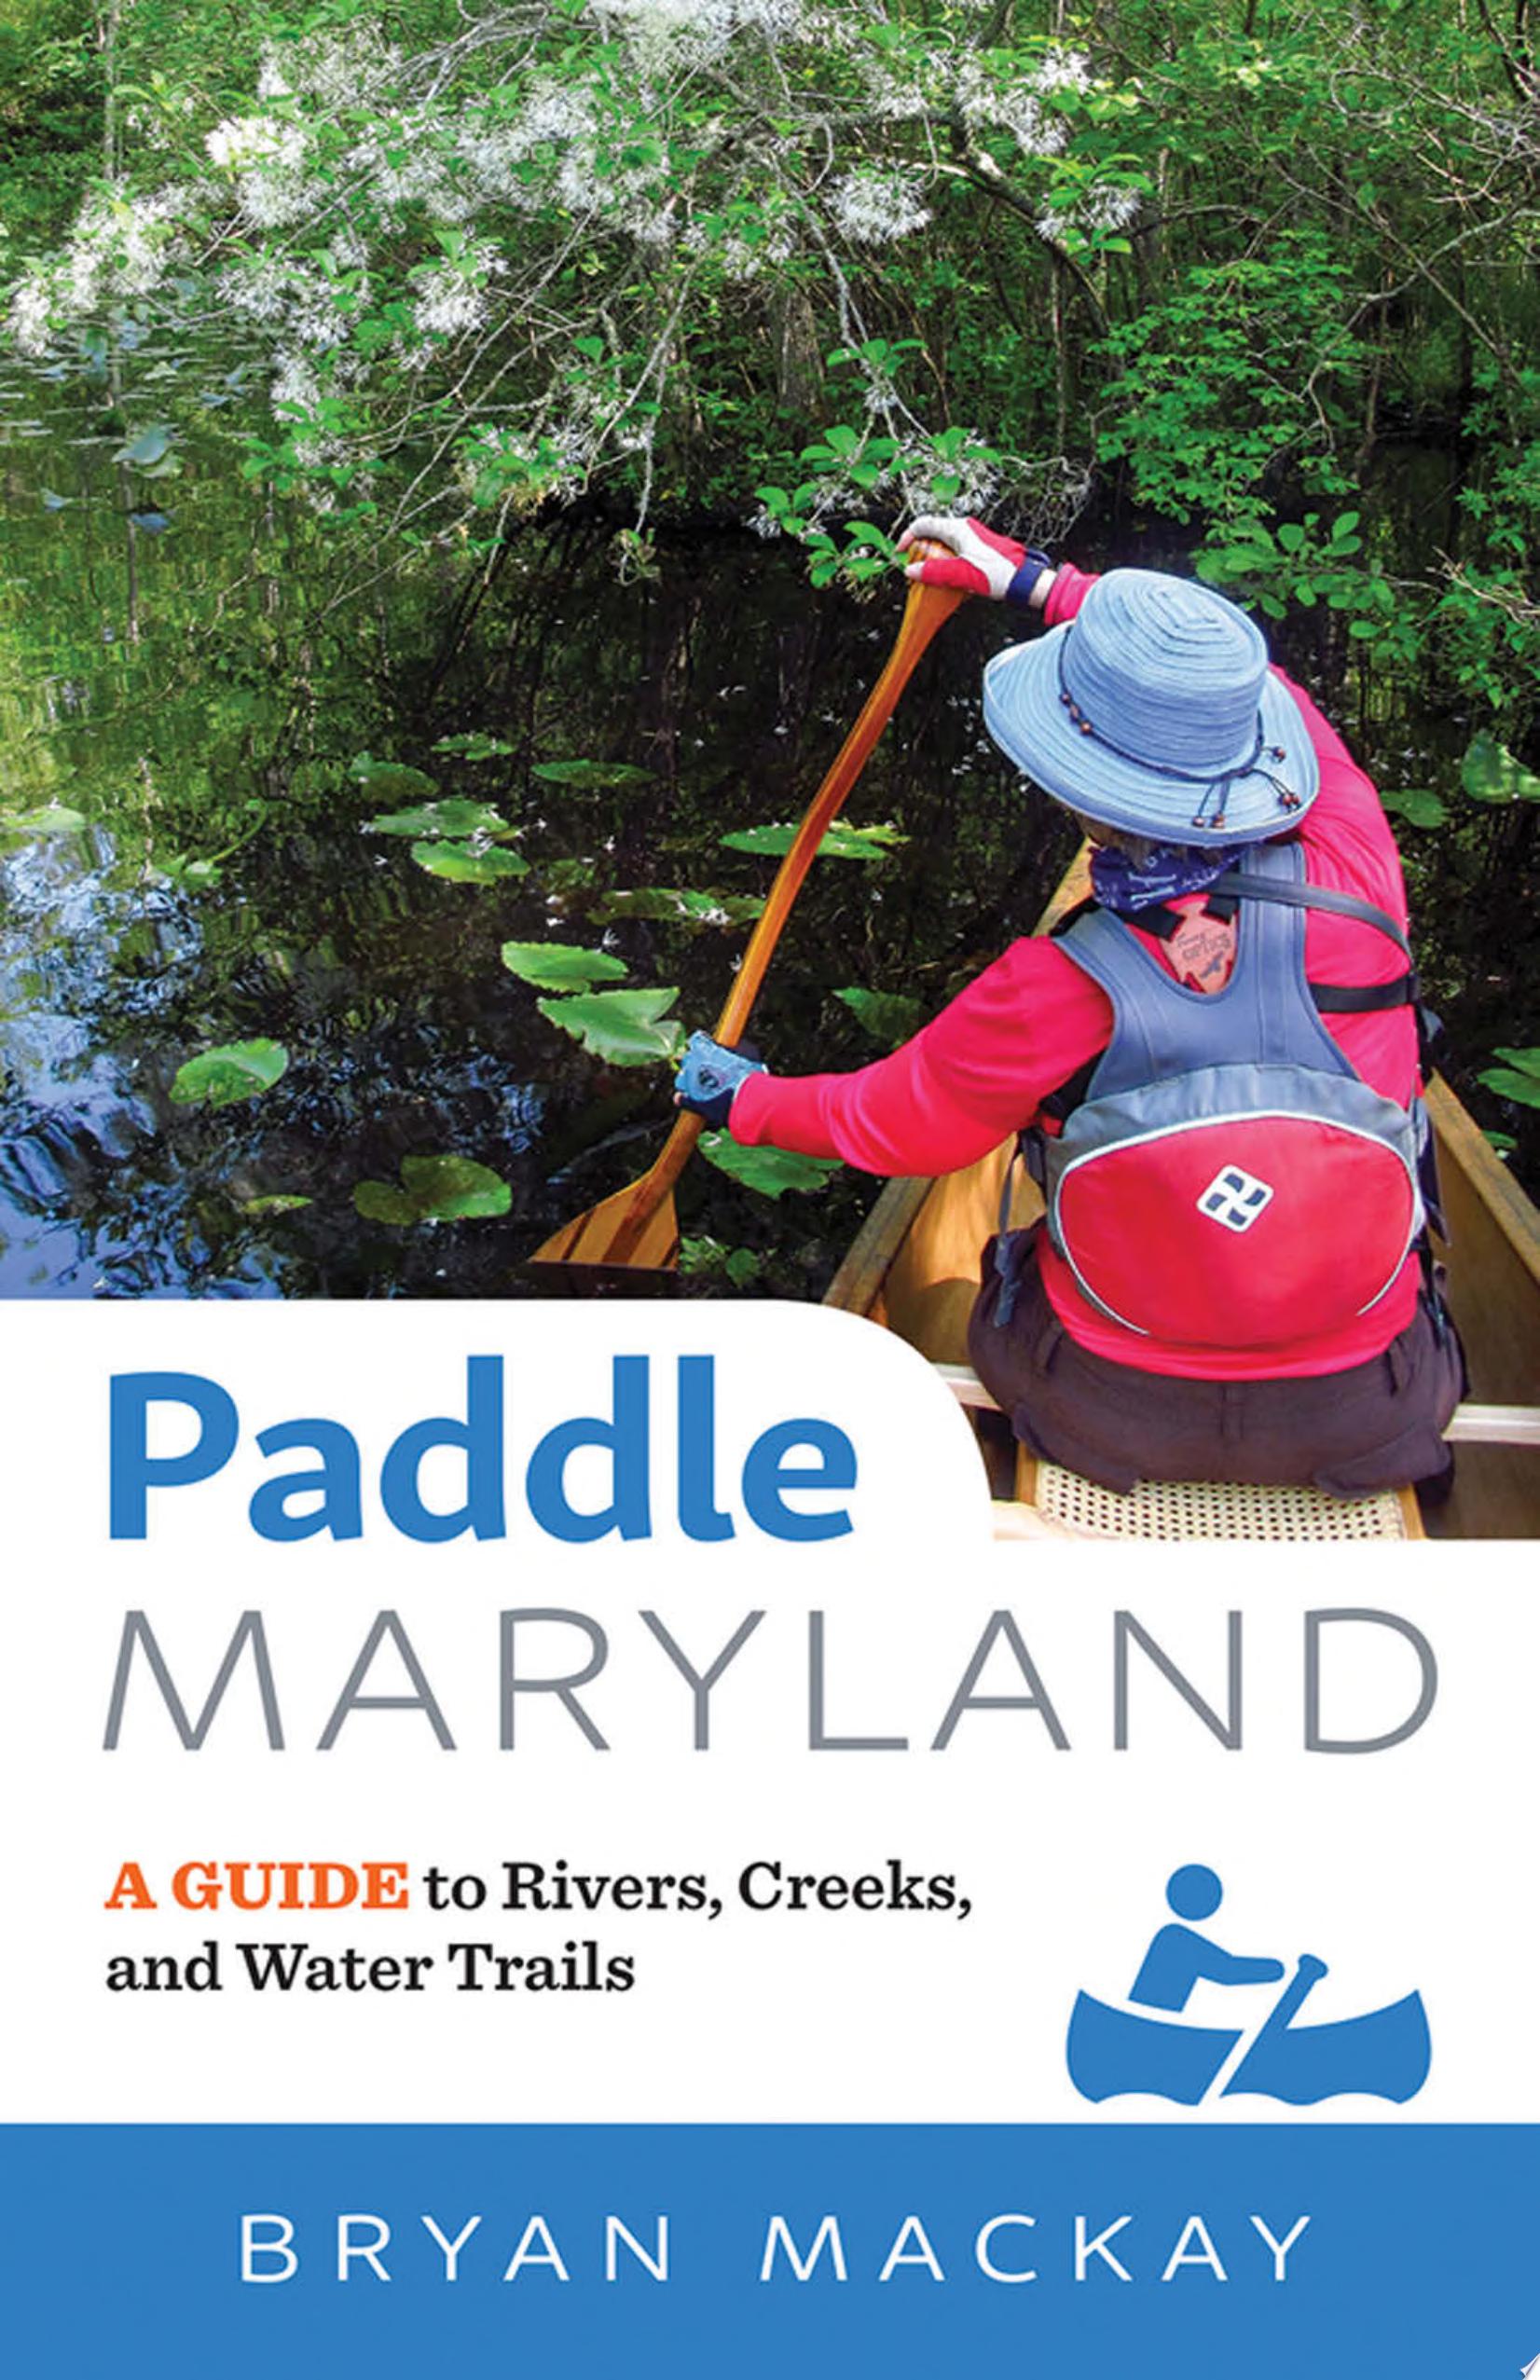 Image for "Paddle Maryland"